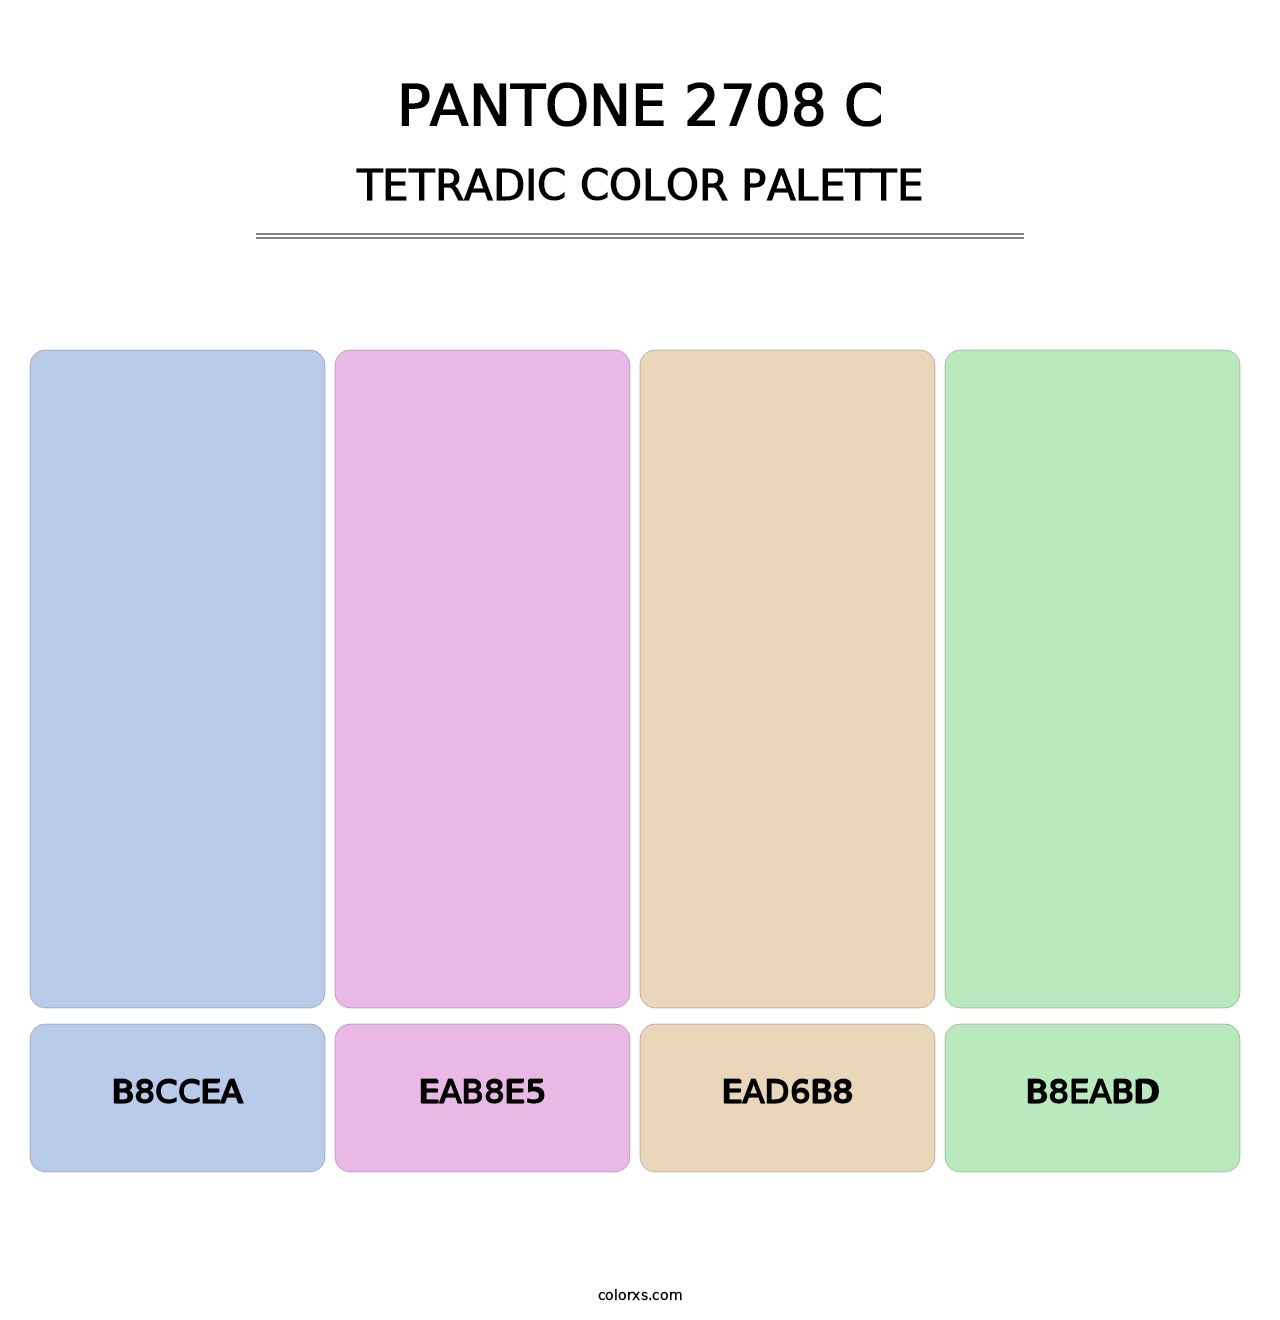 PANTONE 2708 C - Tetradic Color Palette